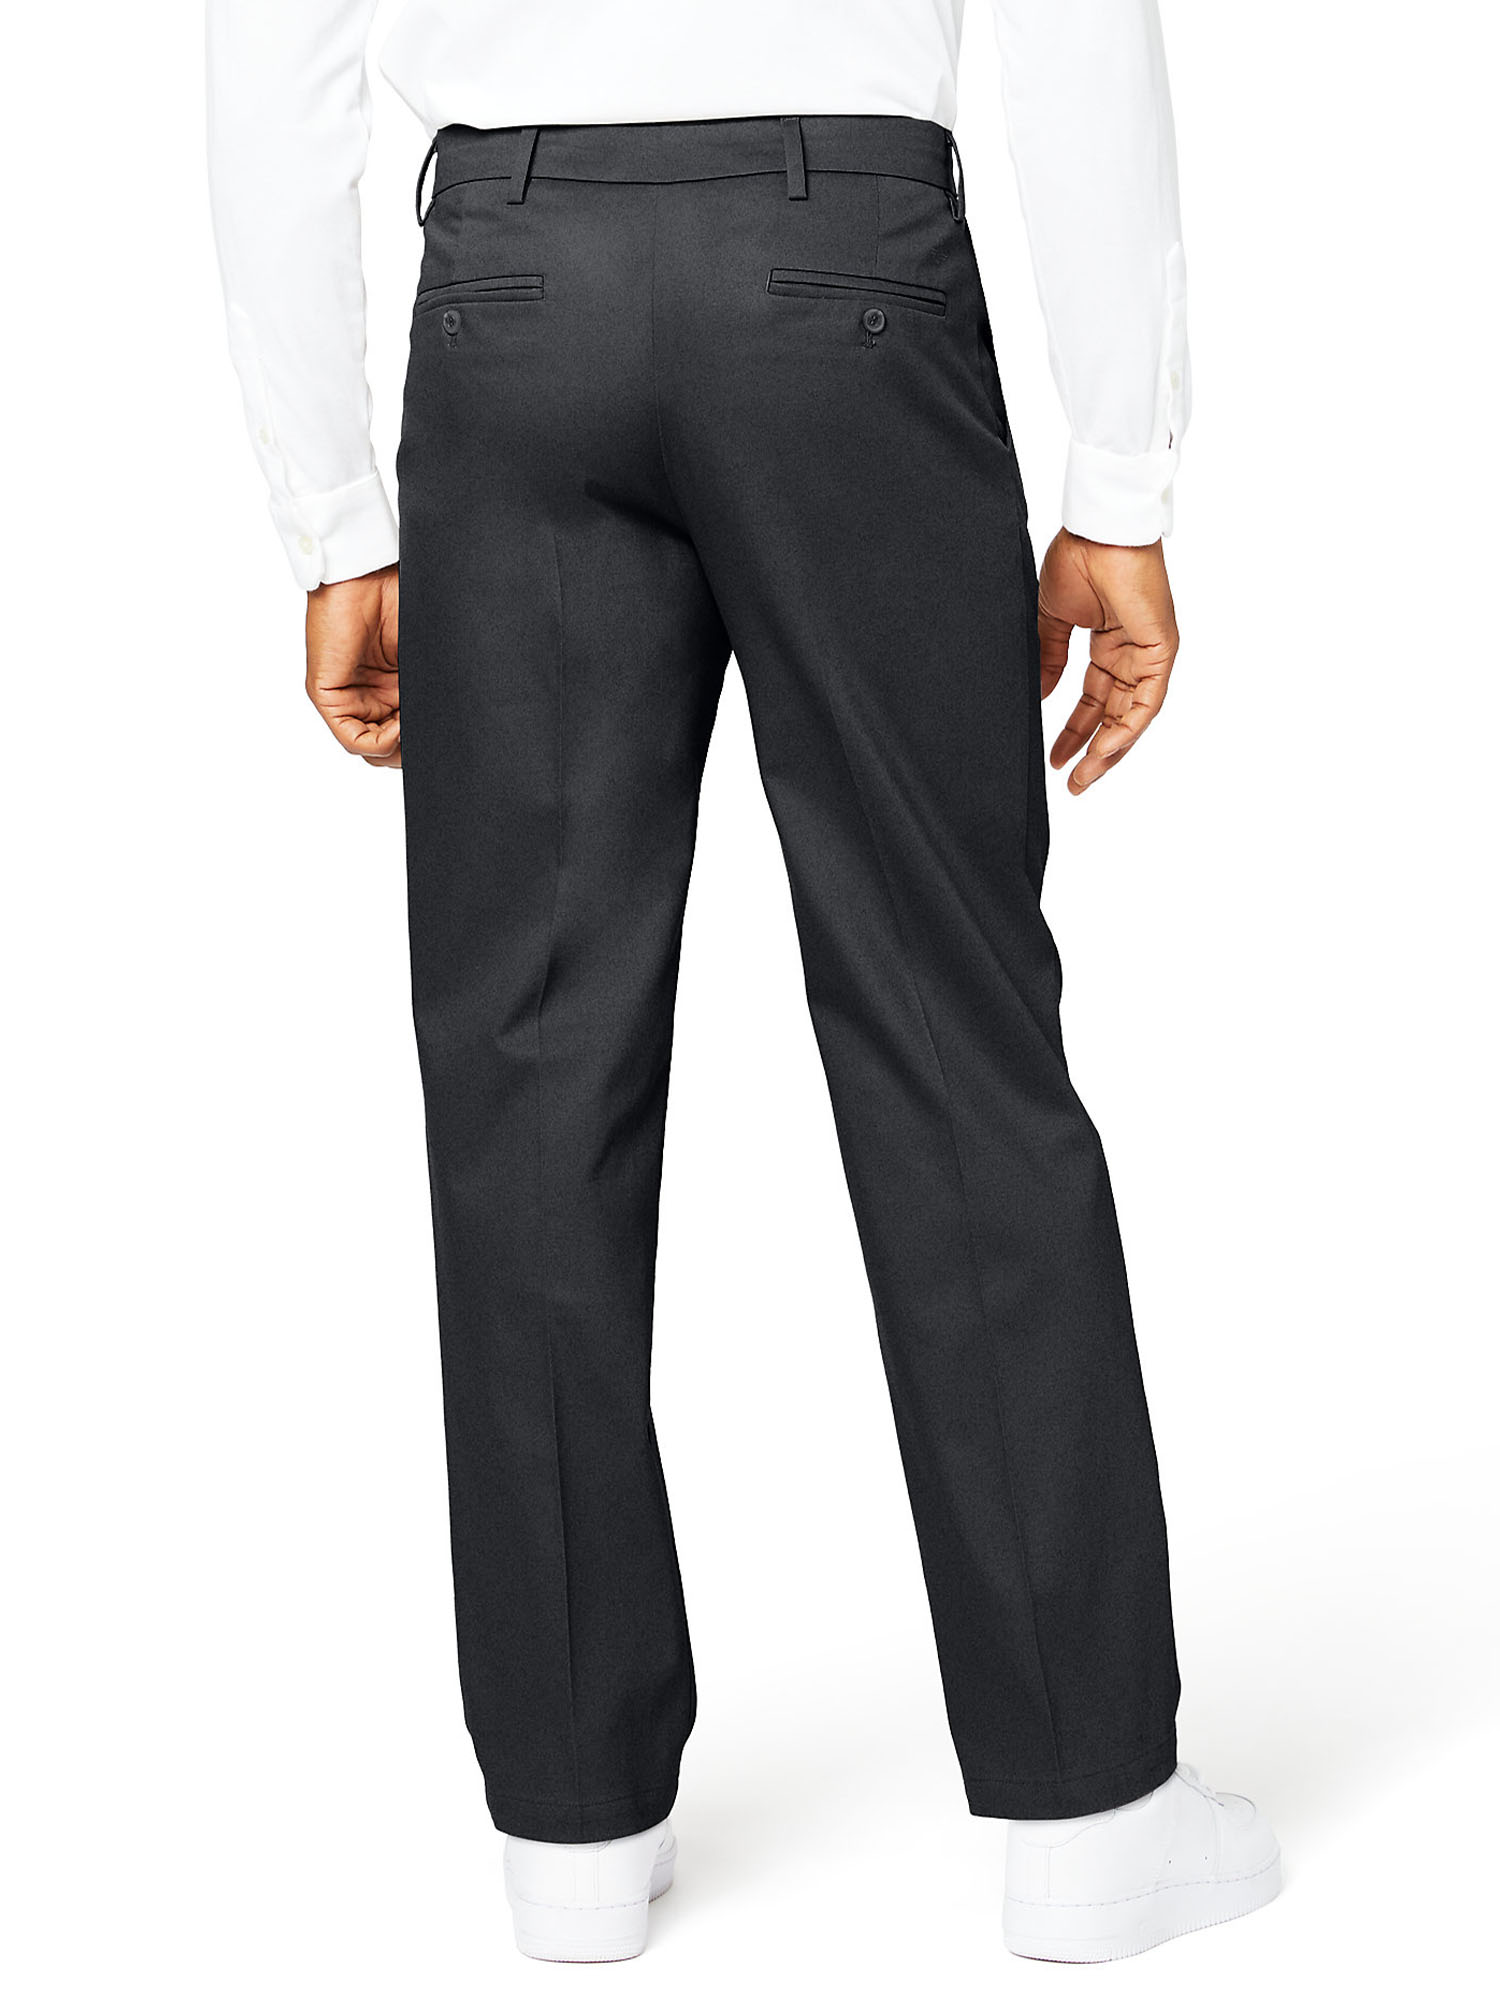 Dockers Men's Pleated Classic Fit Signature Khaki Lux Cotton Stretch Pants - image 2 of 6